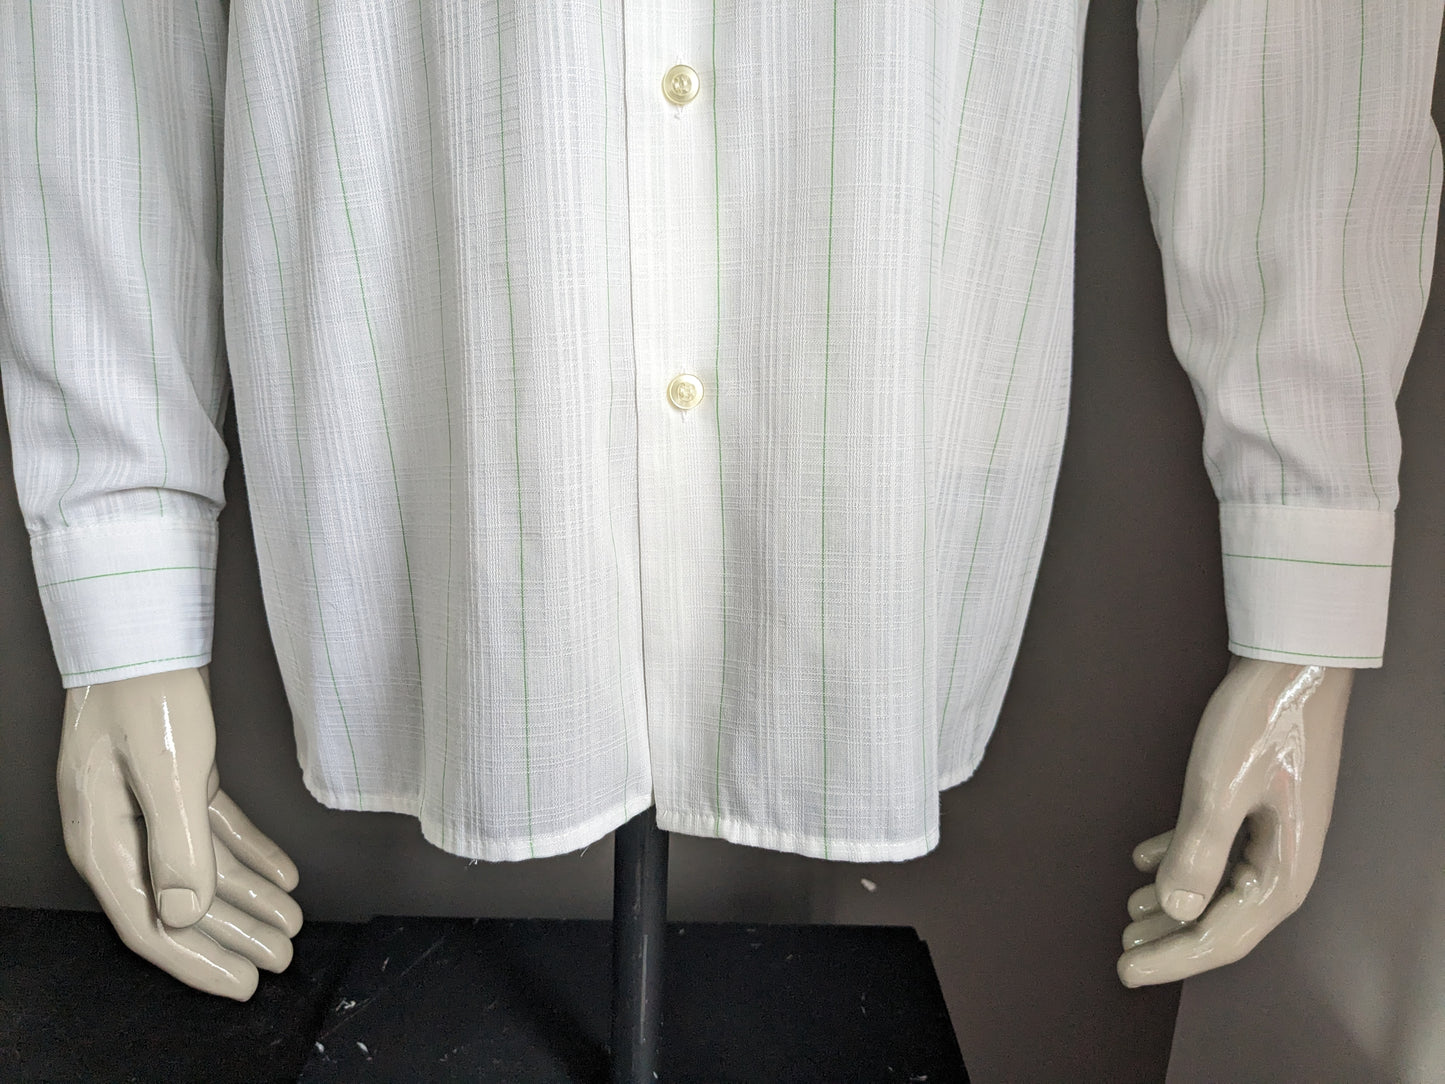 Vintage Labod 70's shirt. White green checked. Size XL.